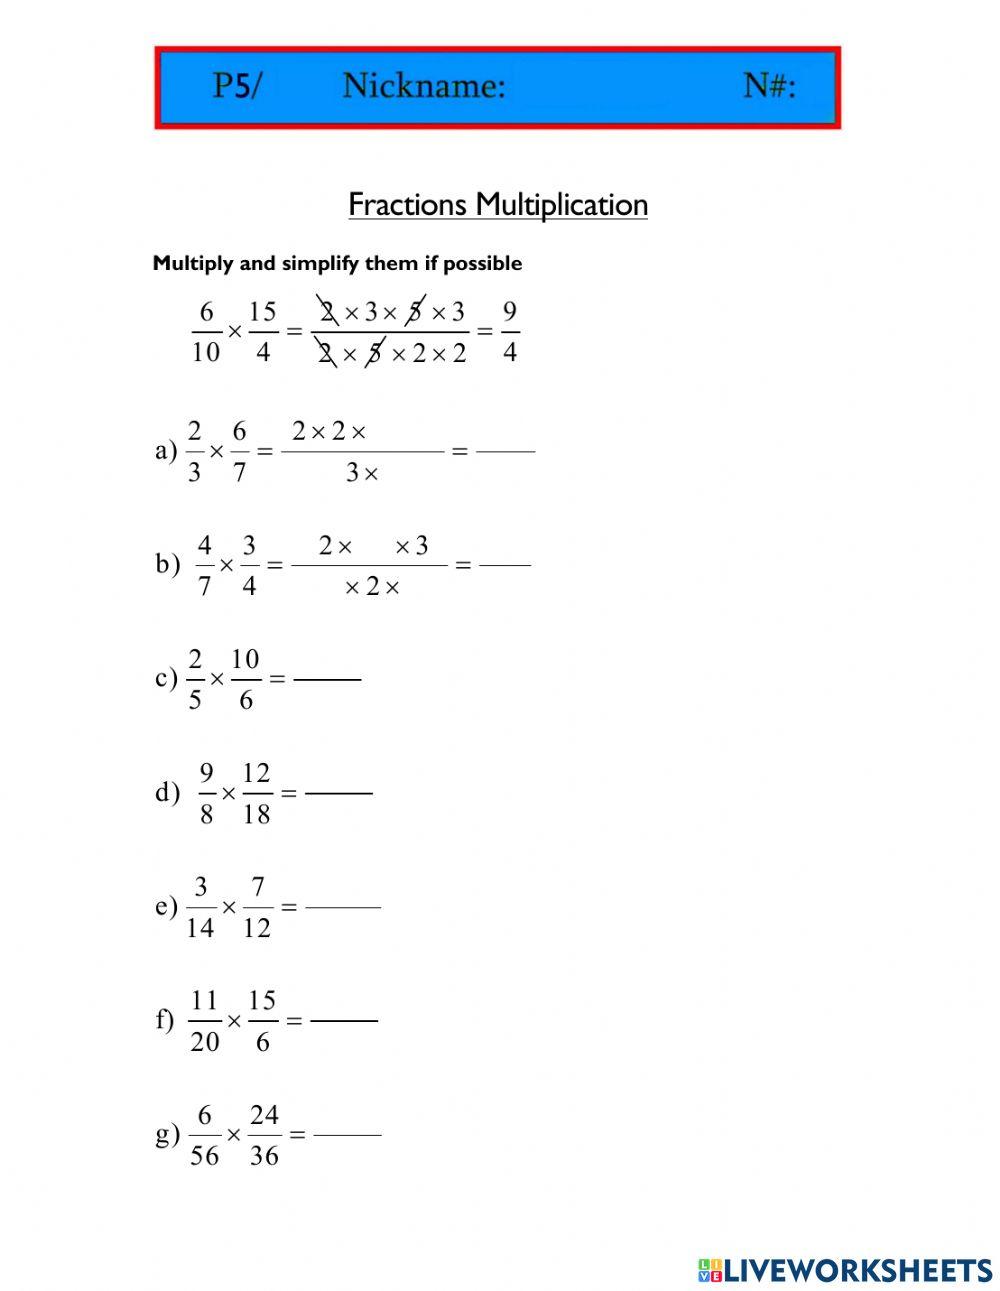 Fraction multiplication